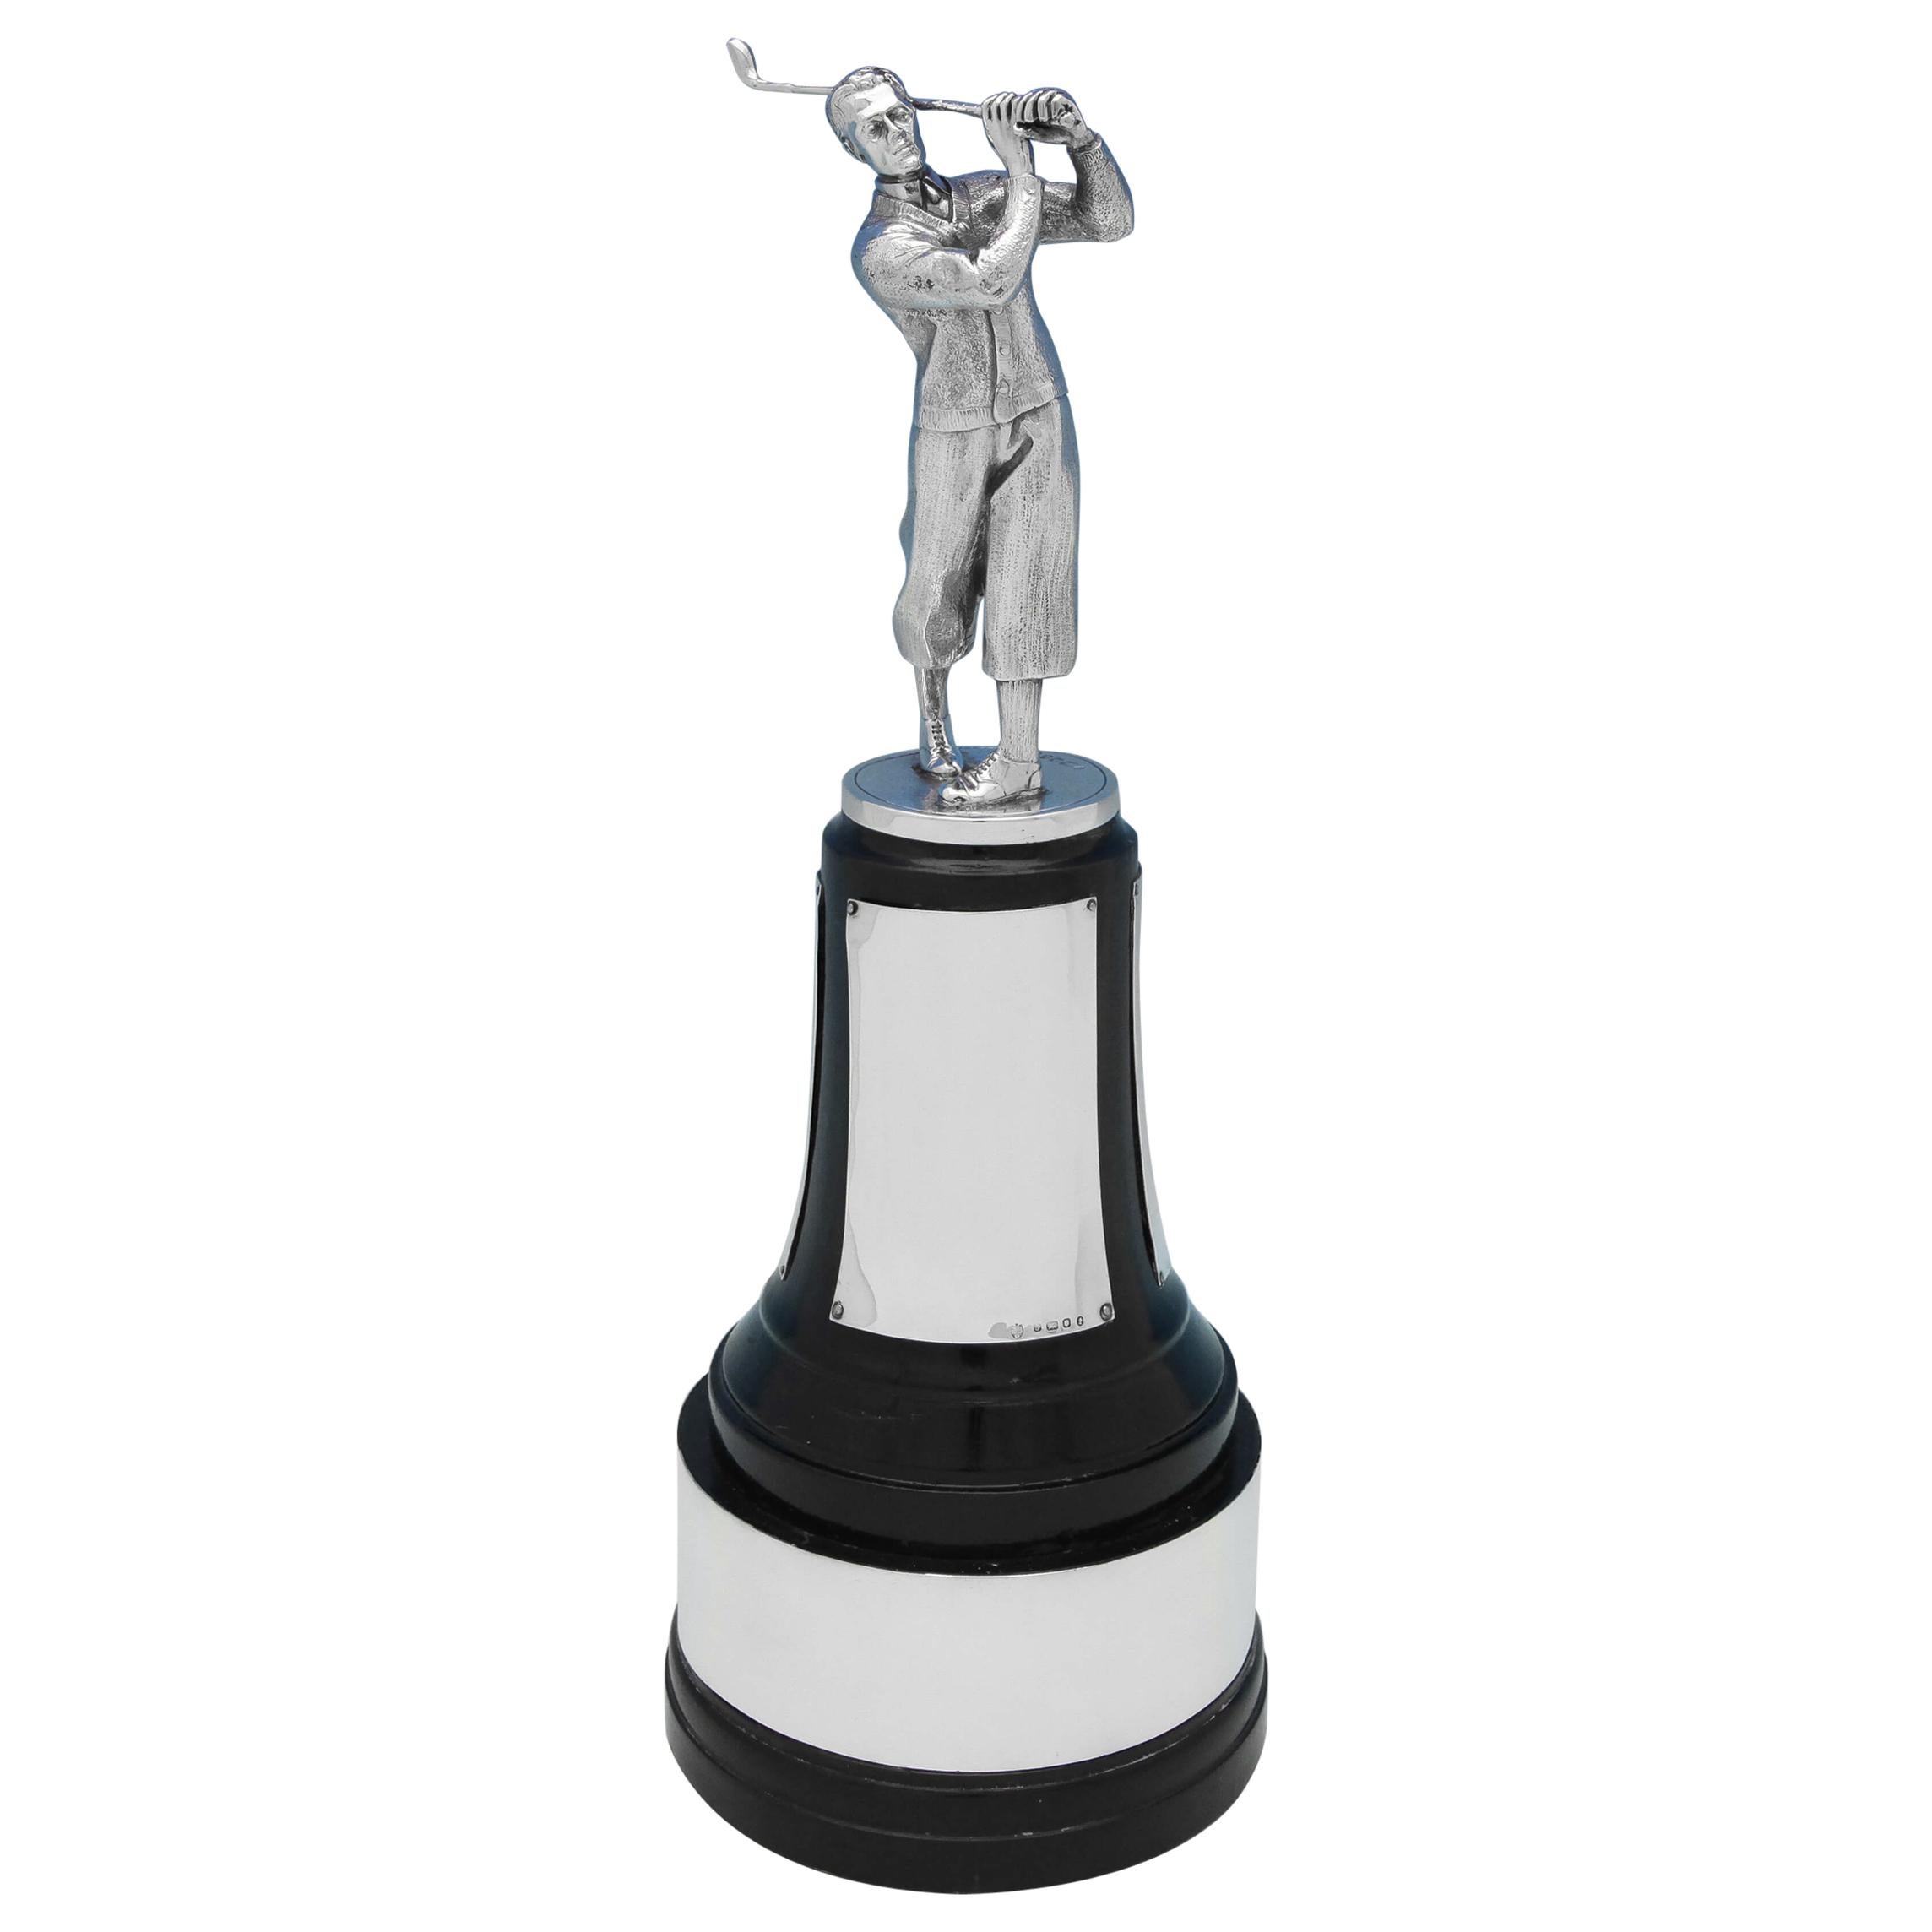 Sterling Silver Golf Trophy by Edward Barnard & Sons in 1953